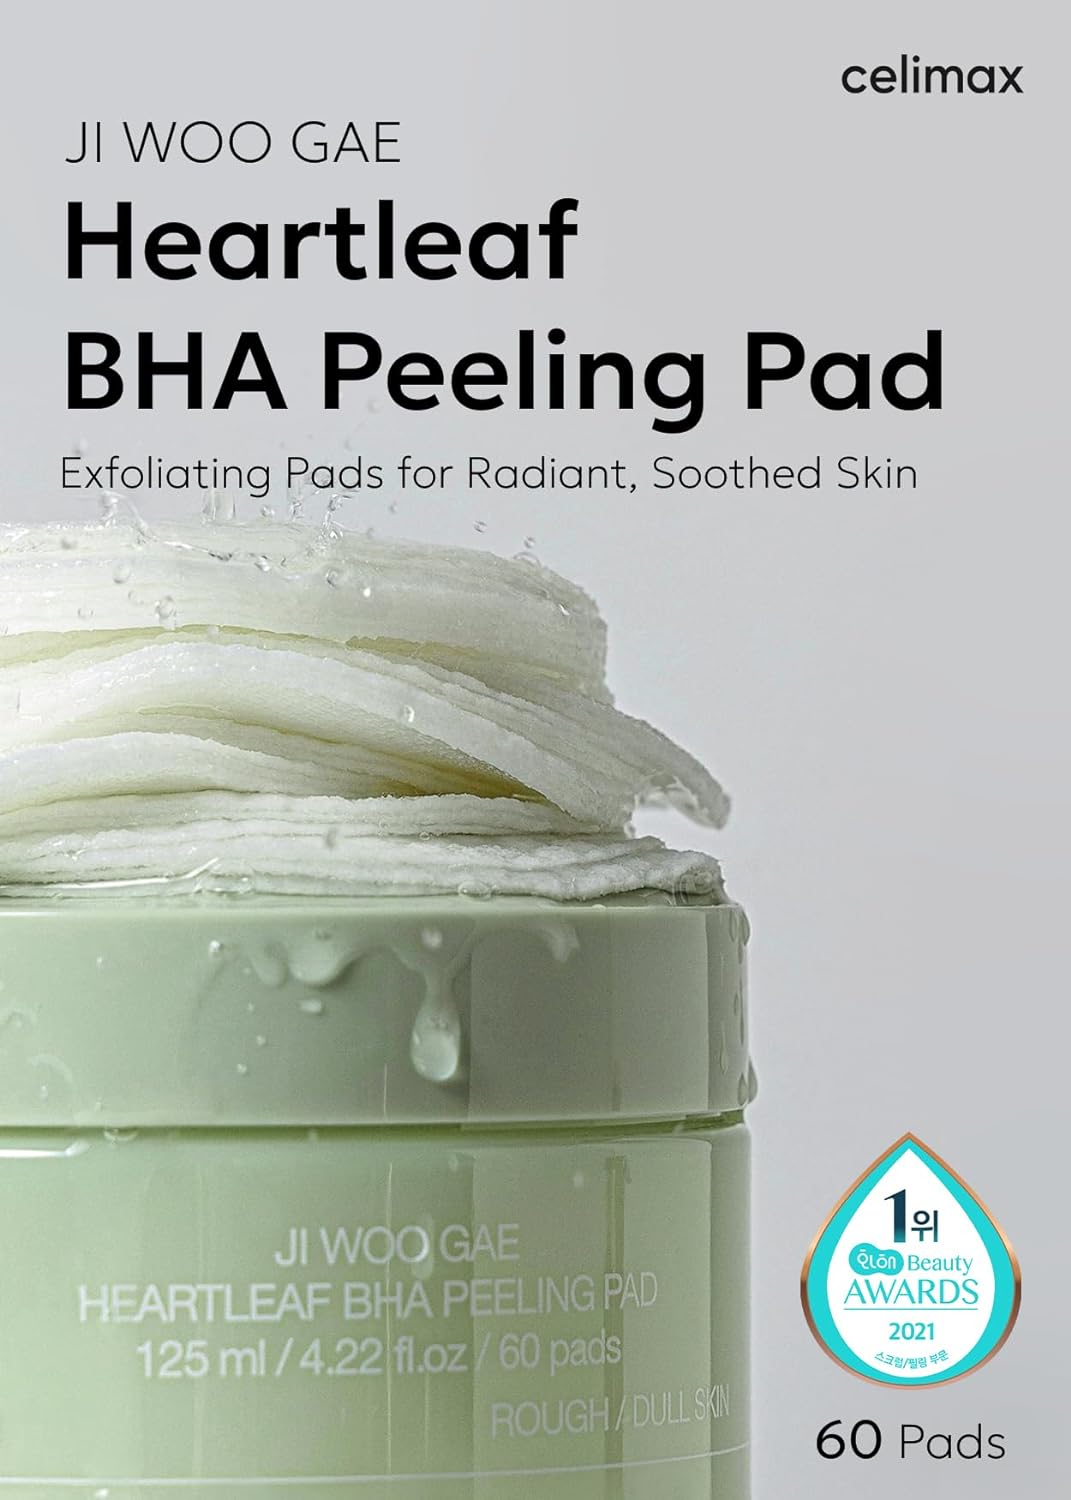 Celimax JI WOO GAE Heartleaf BHA Peeling Pad, 125ml / 4.22 fl.oz / 60 pads